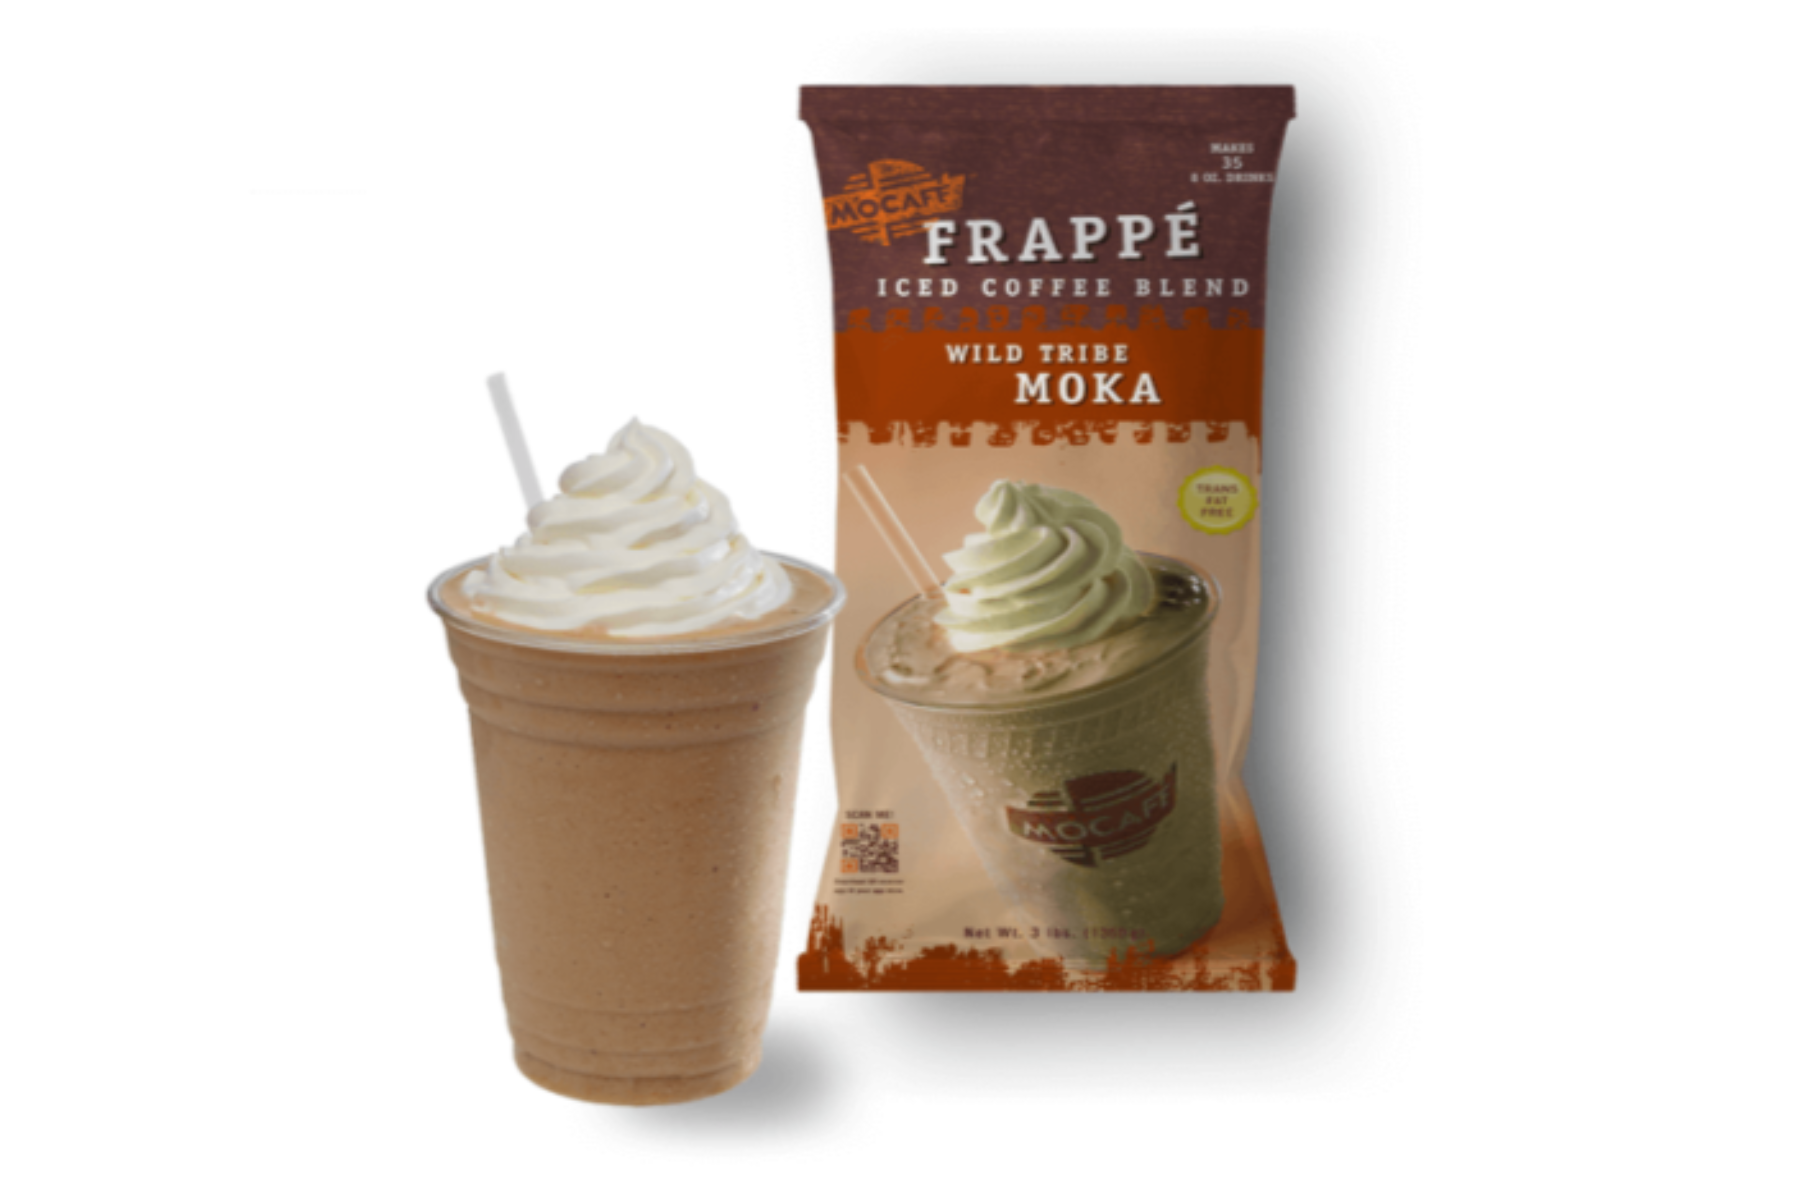 MoCafe - Blended Ice Frappes - 25 lb. Box: Wild Tribe Moka